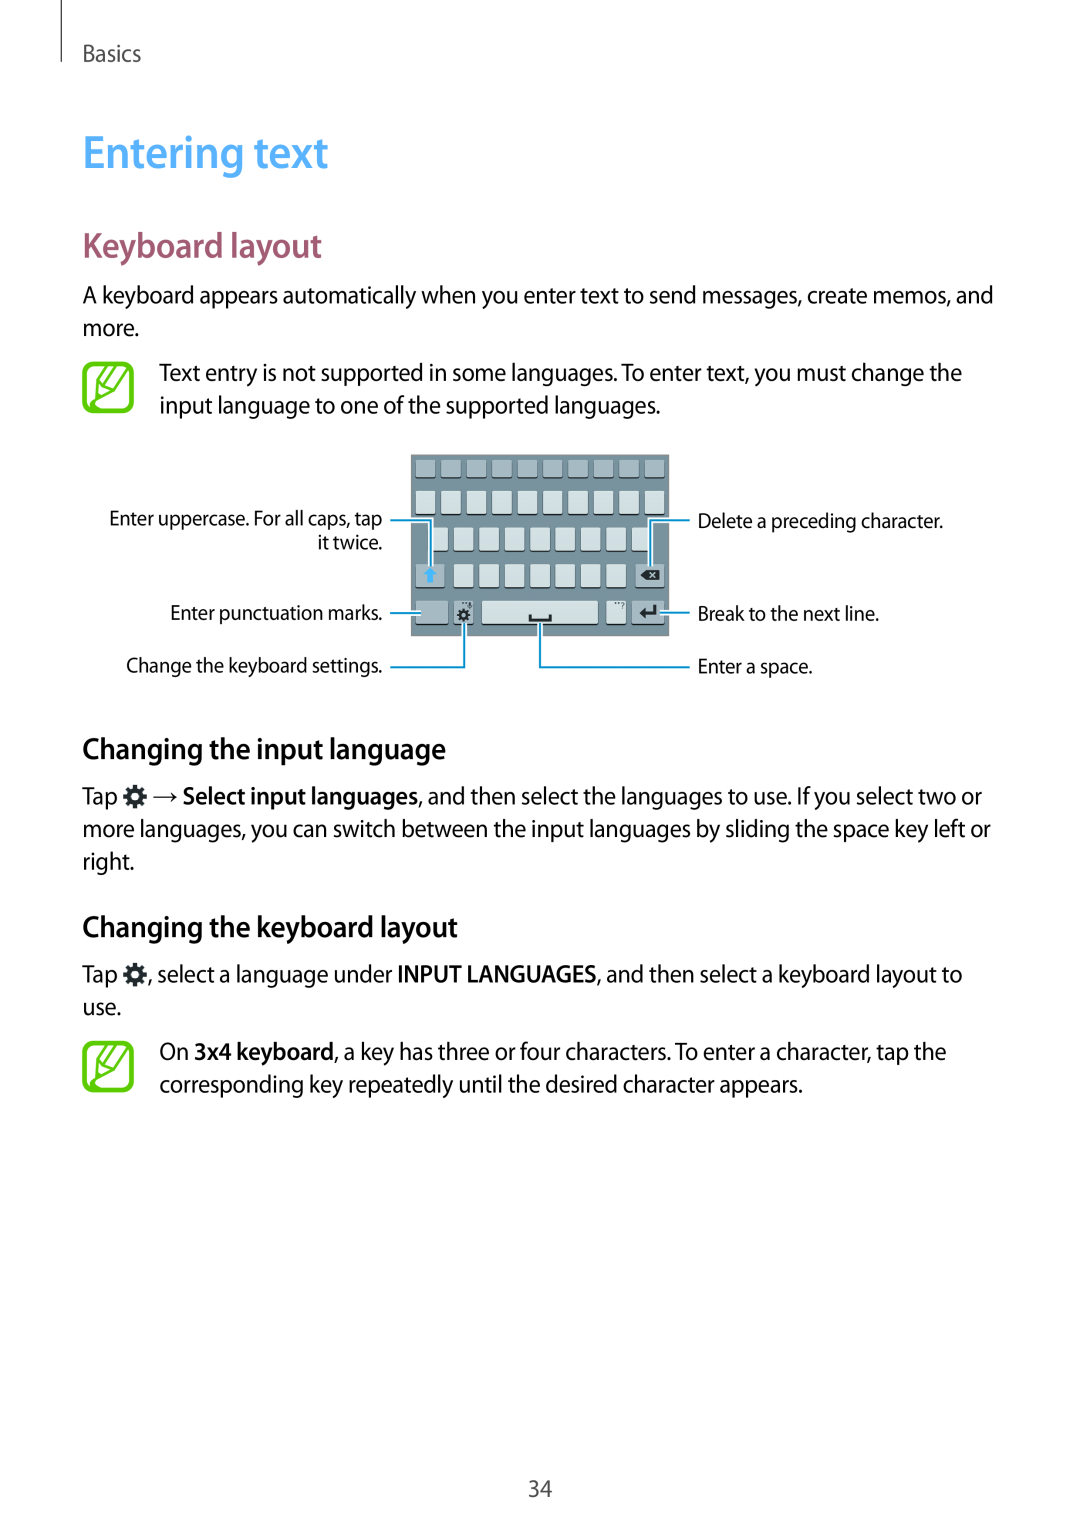 Samsung SM-A700FZWAO2C Entering text, Keyboard layout, Changing the input language, Changing the keyboard layout, Basics 